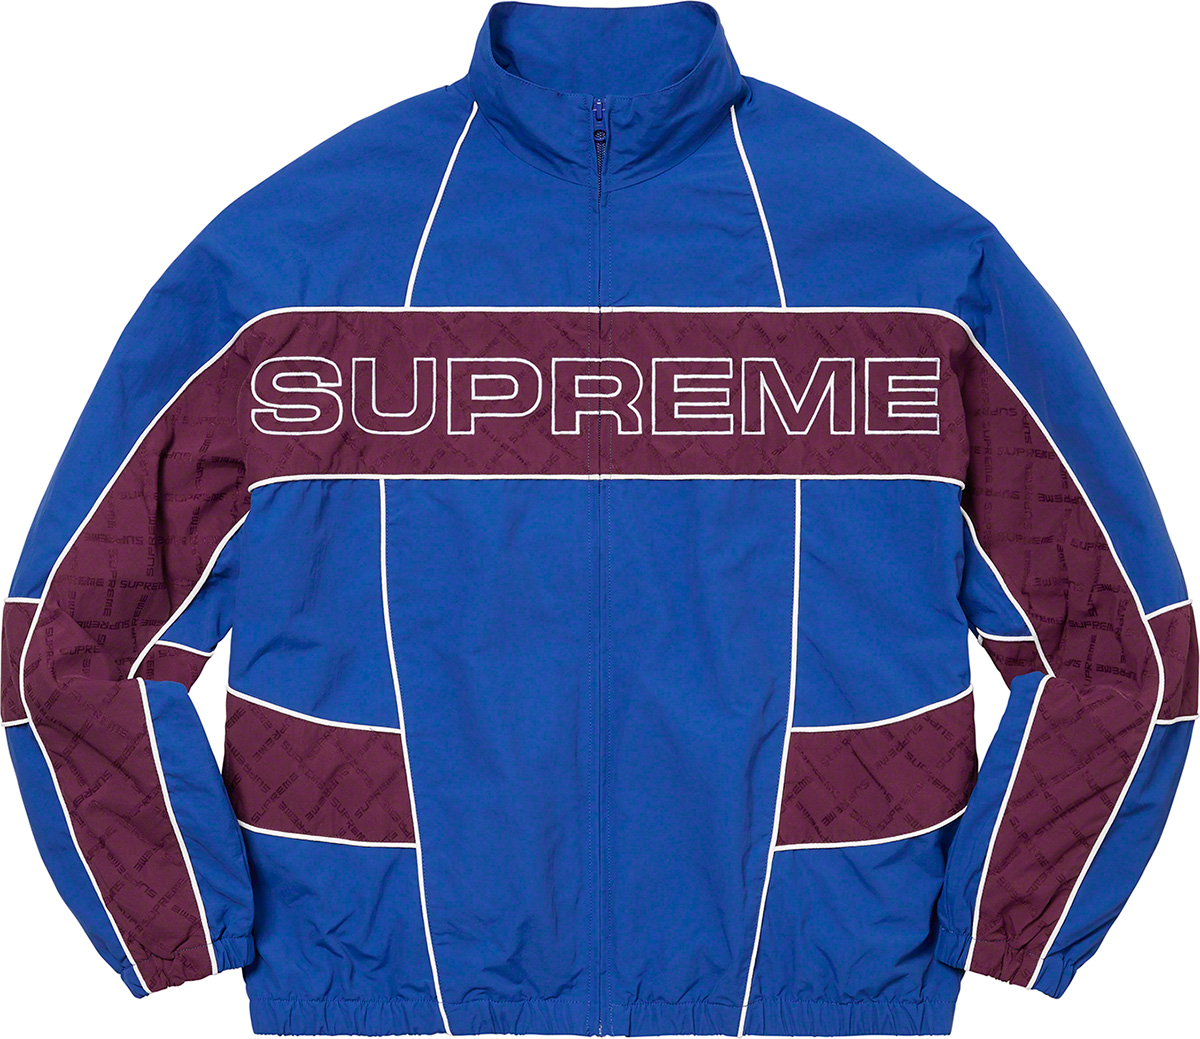 22fw Supreme Jacquard panel track jacket